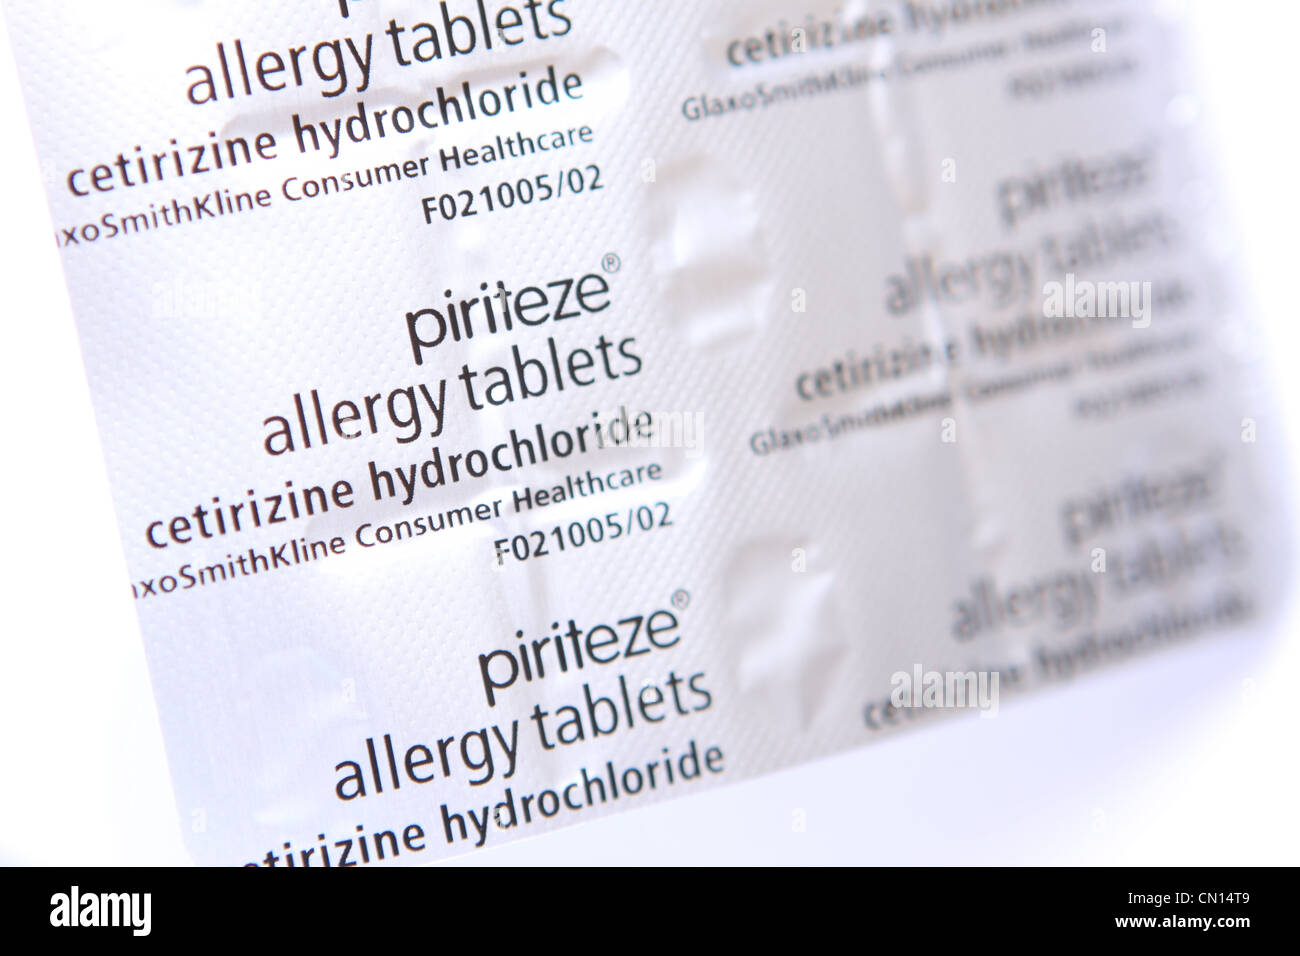 Piriteze Allergy Tablets foil packet containing "Cetirizine Hydrochloride  Stock Photo - Alamy